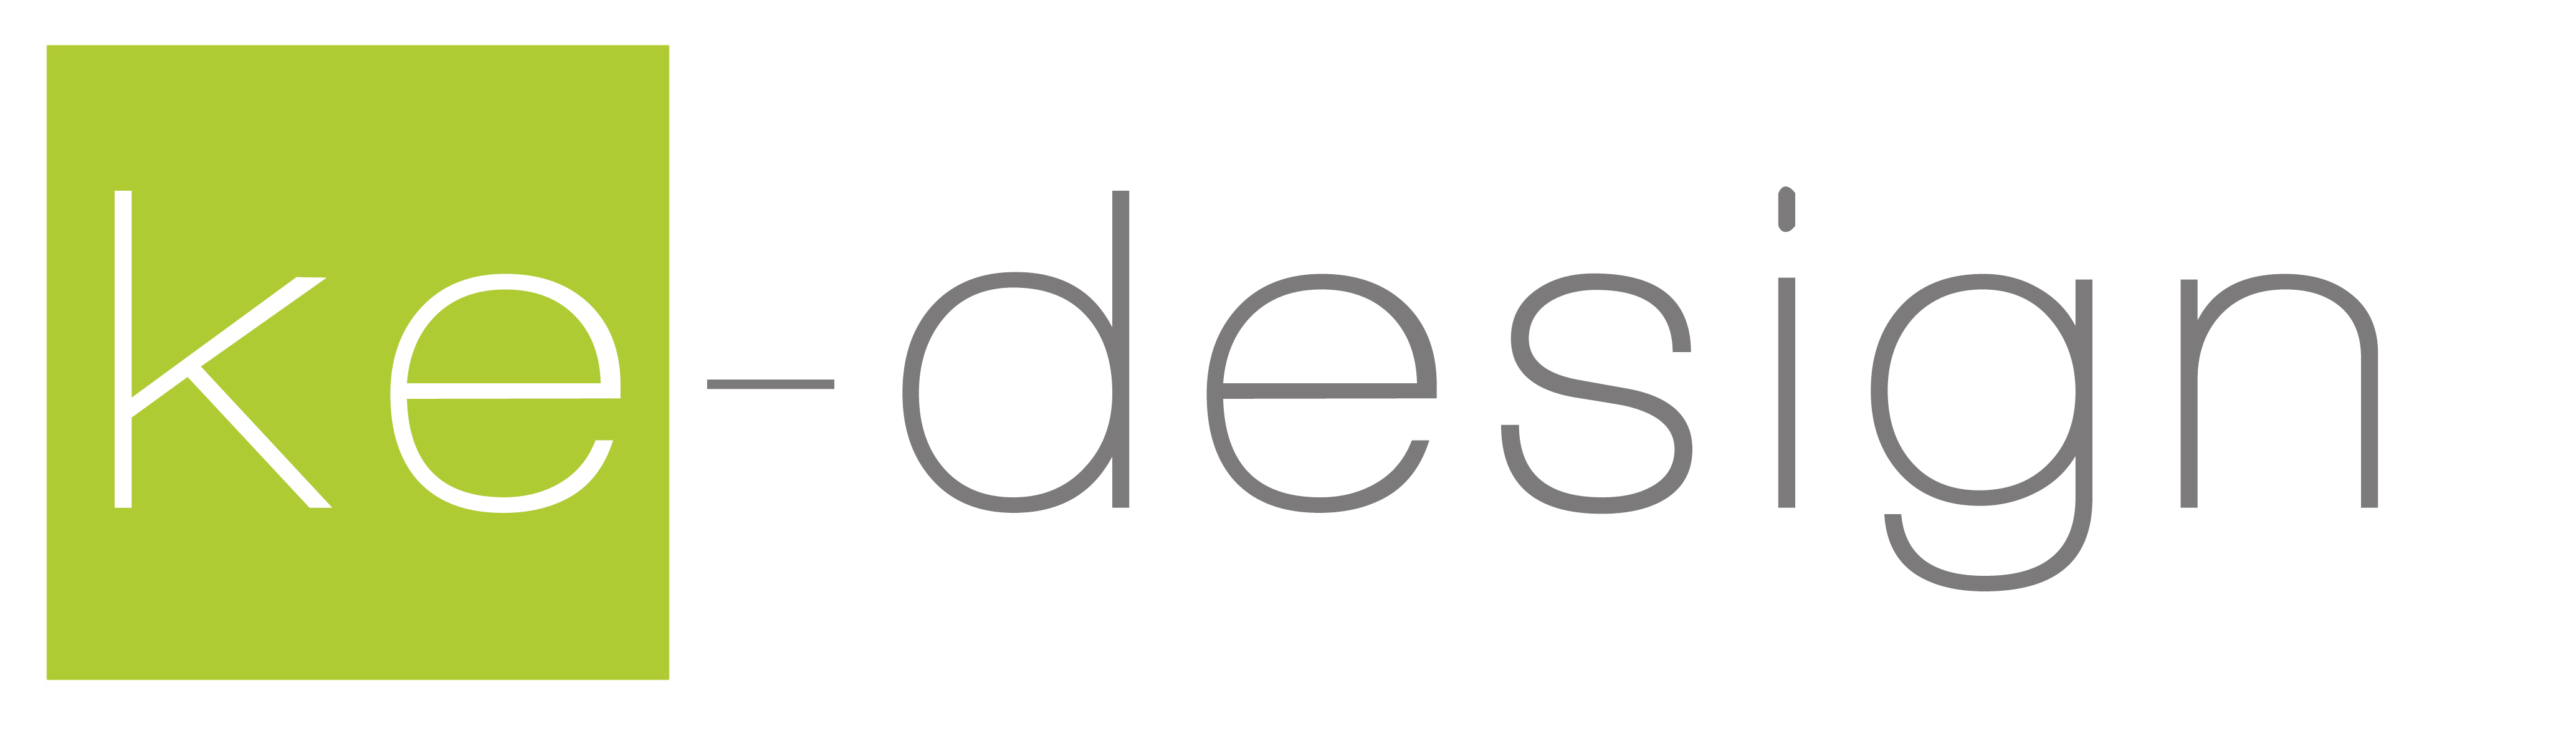 Ke-design- 2018 titleblock logo